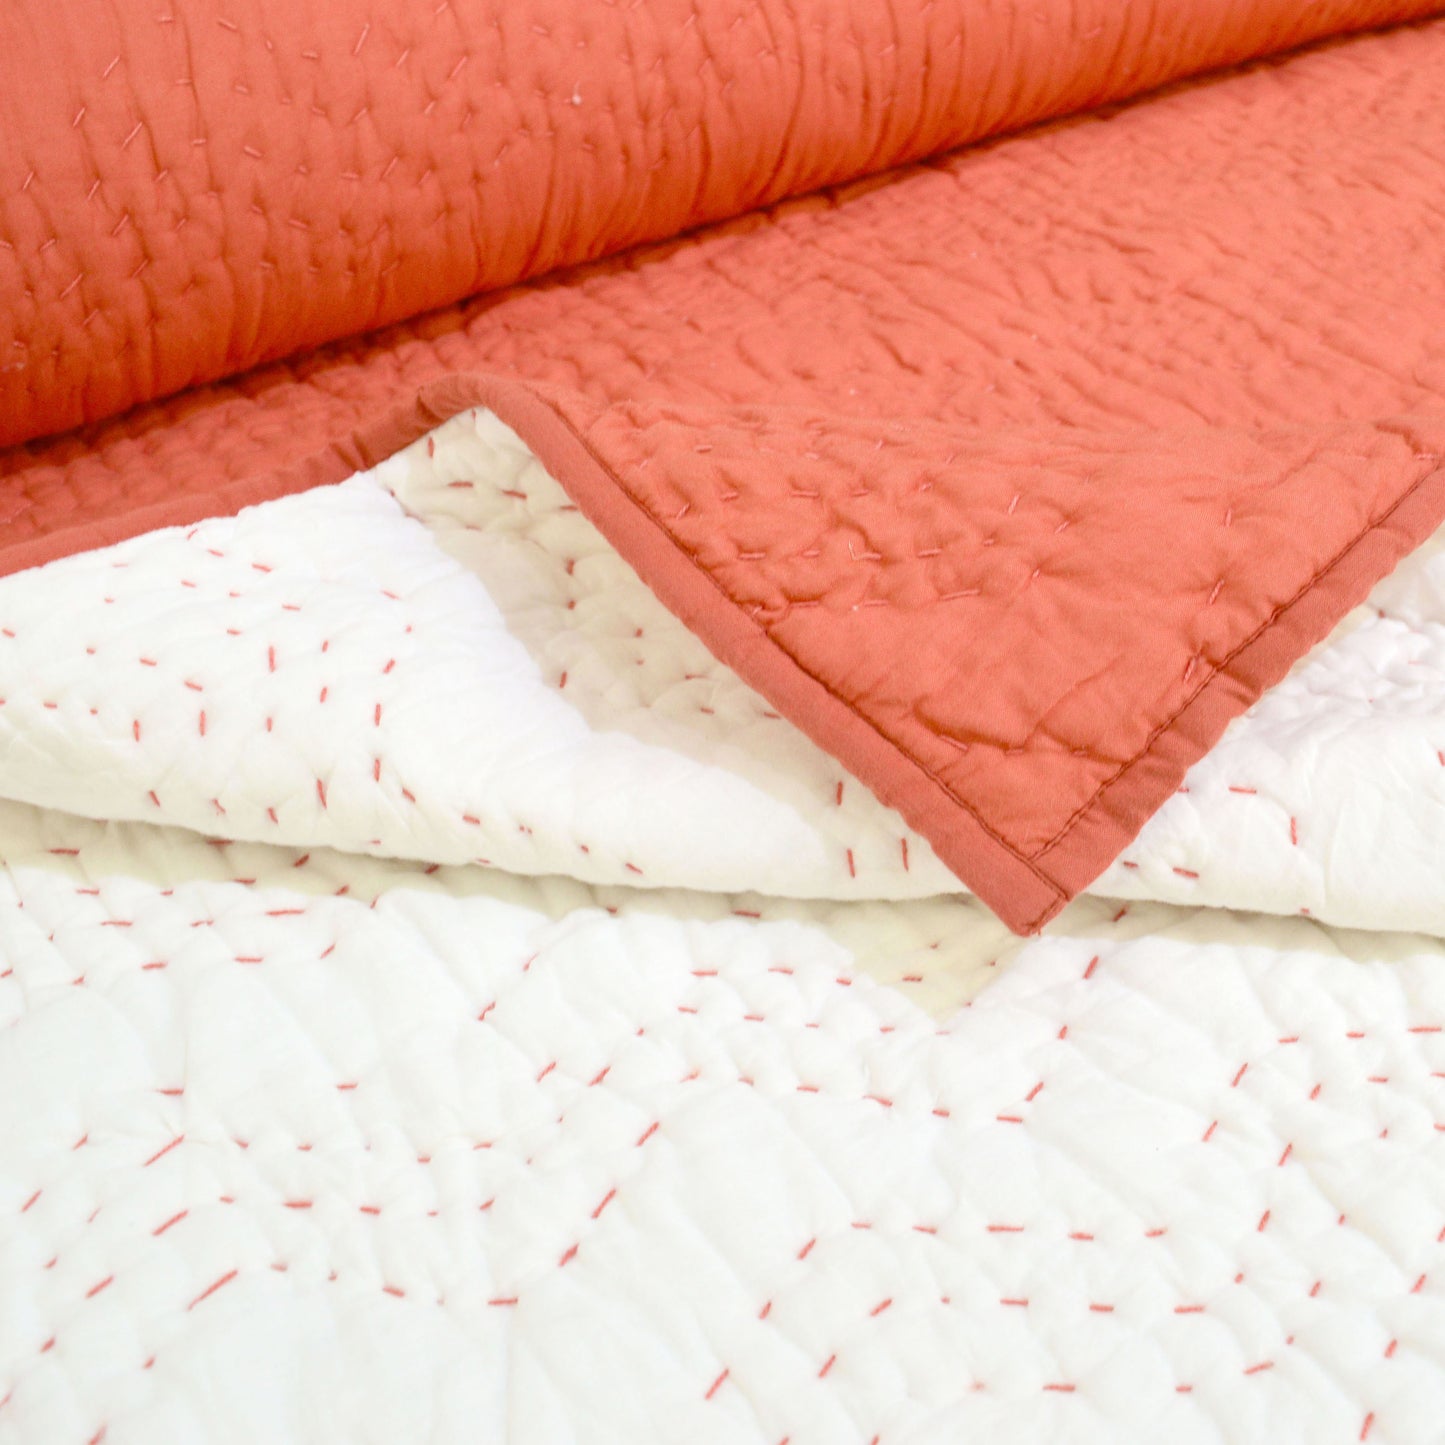 RUST Kantha quilt - chevron pattern quilting - Quilt set / Quilt / Pillow case available